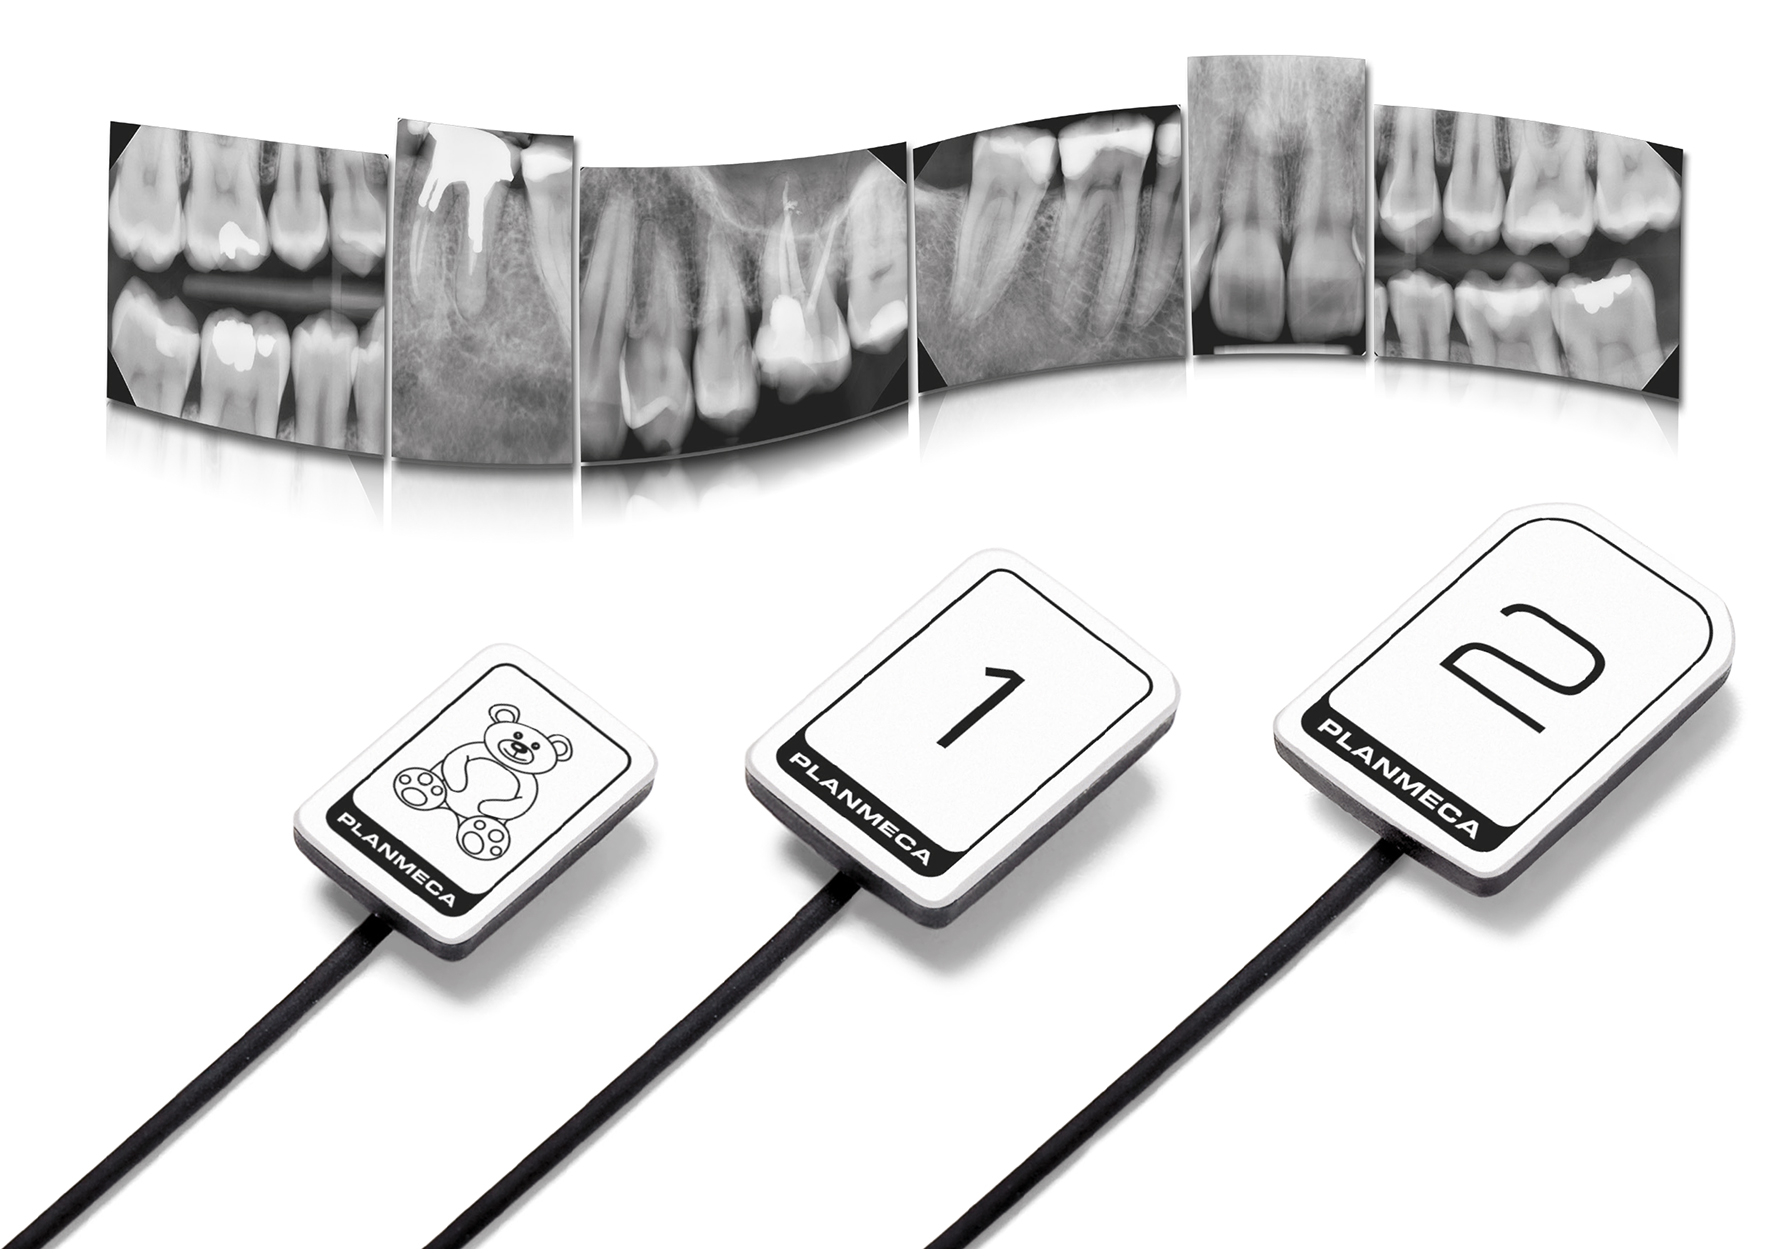 Neuer Planmeca ProSensor® HD hebt den Standard interoraler dentaler Bildgebung